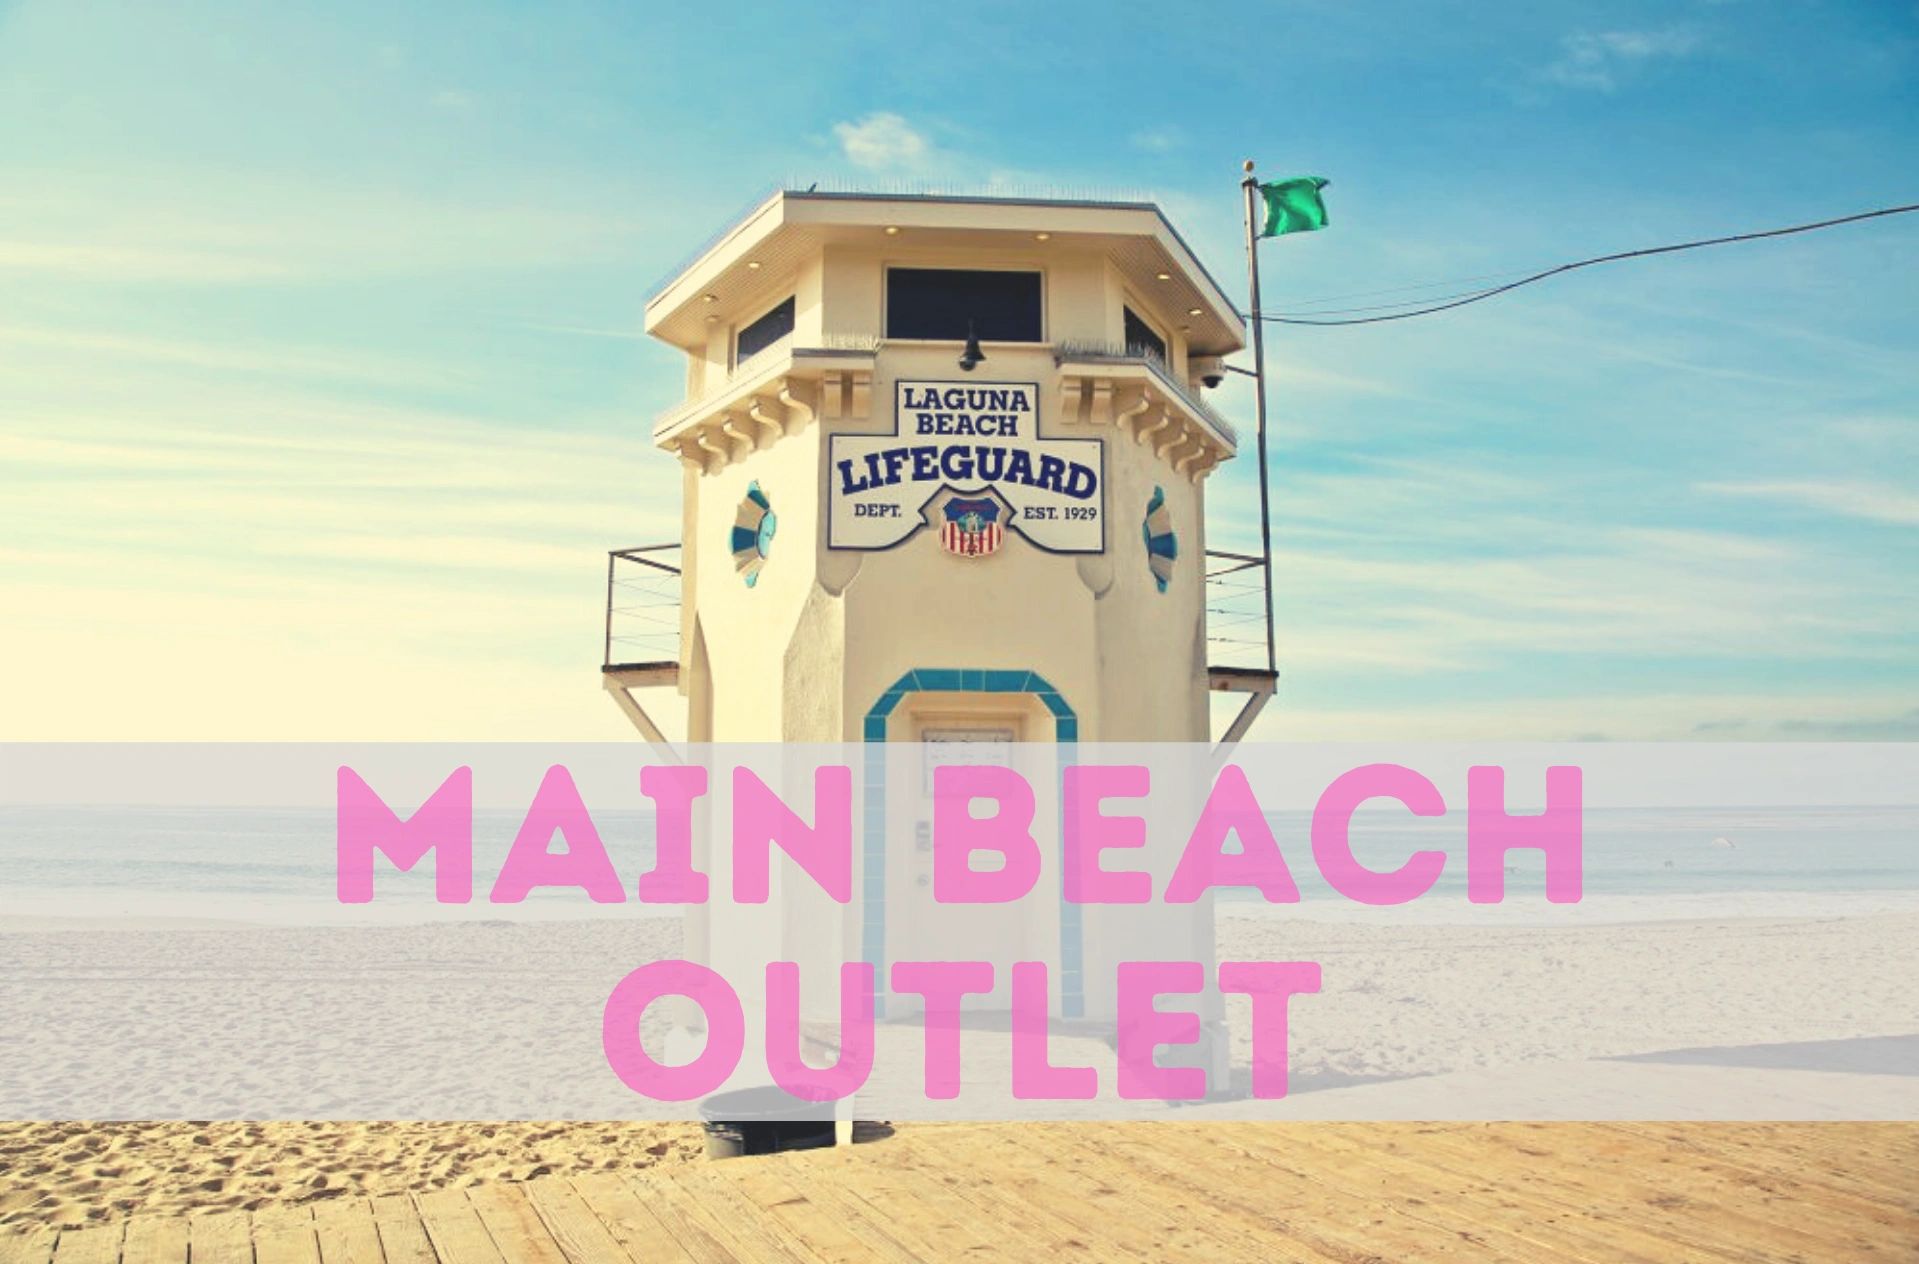 Main Beach Outlet, Retail Clothing Store,Best Deals in Laguna Beach